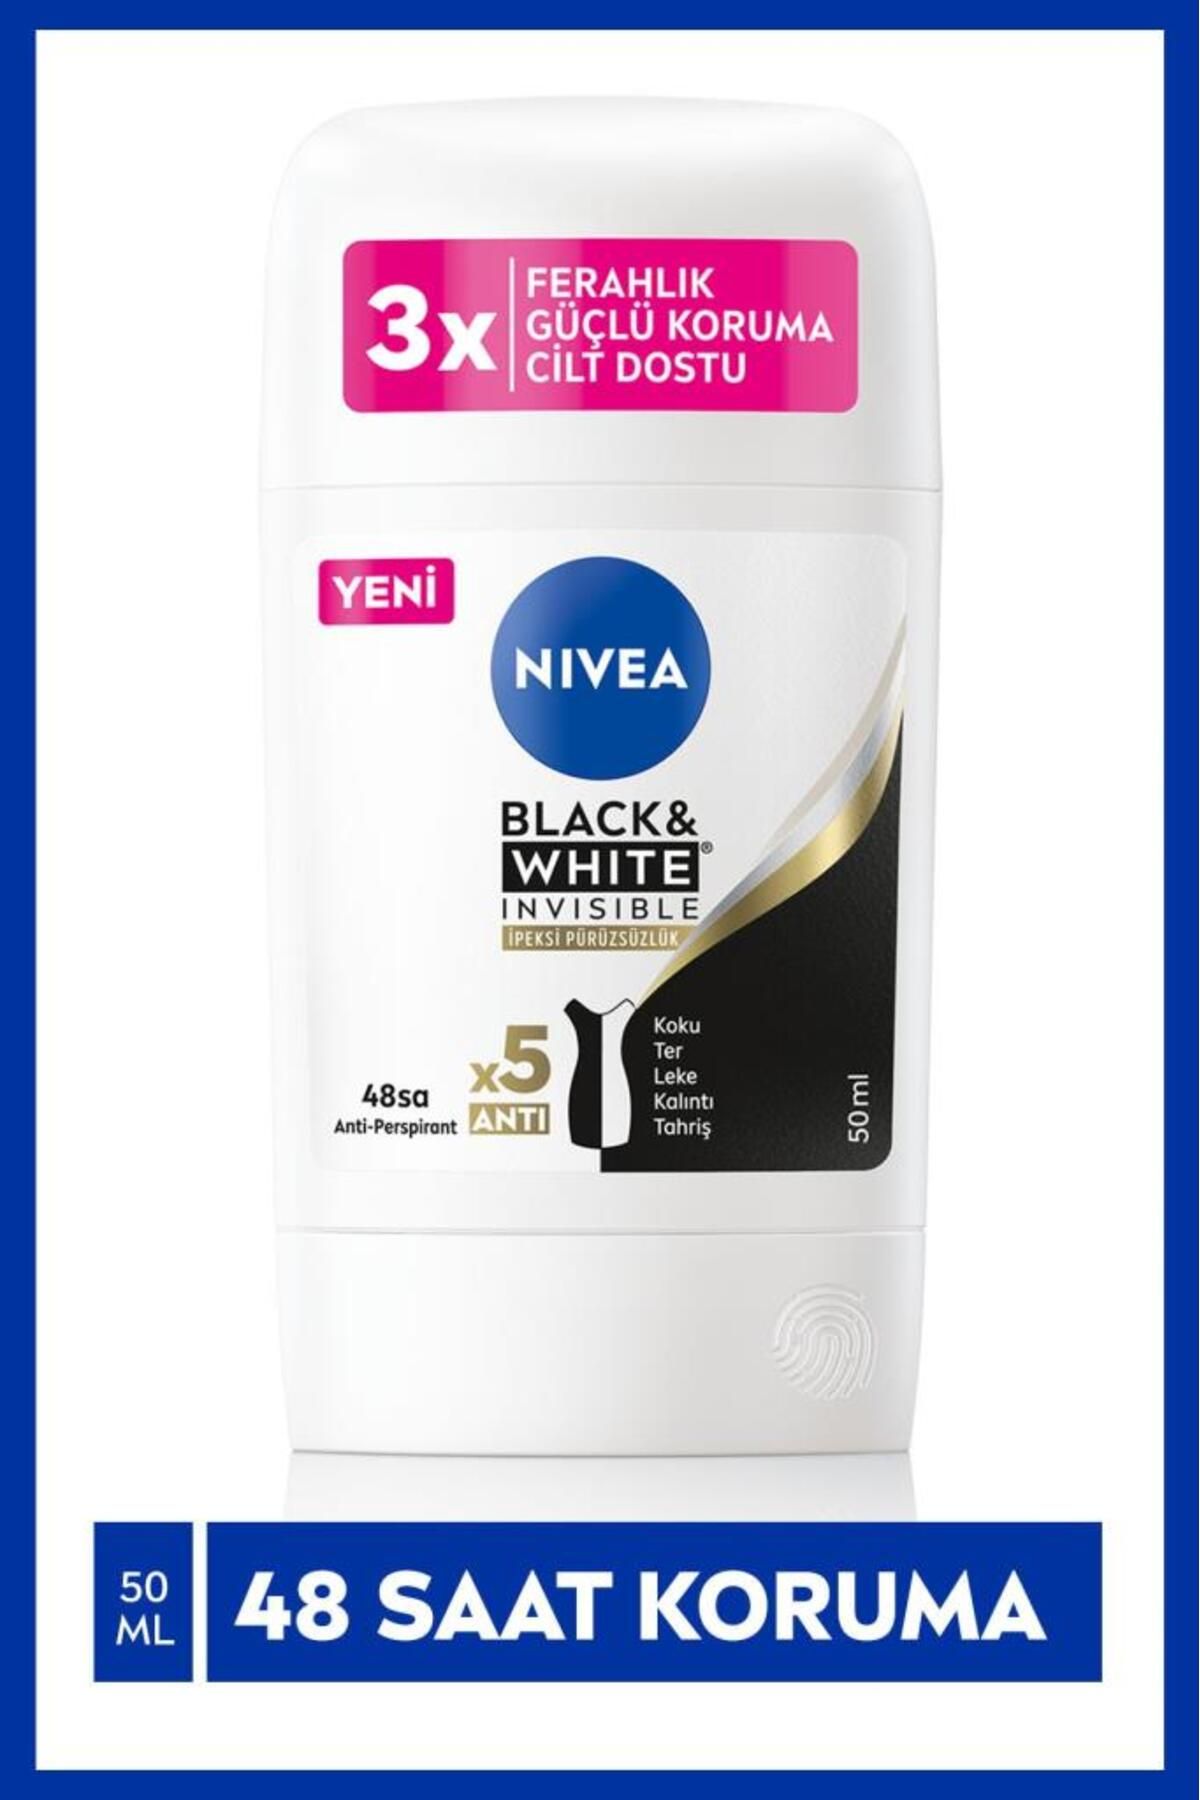 NIVEA Kadın Stick Deodorant Black&white Invisible Ipeksi Pürüsüzlük 50ml, Terkokusuna Karşı 48 Saat Koruma